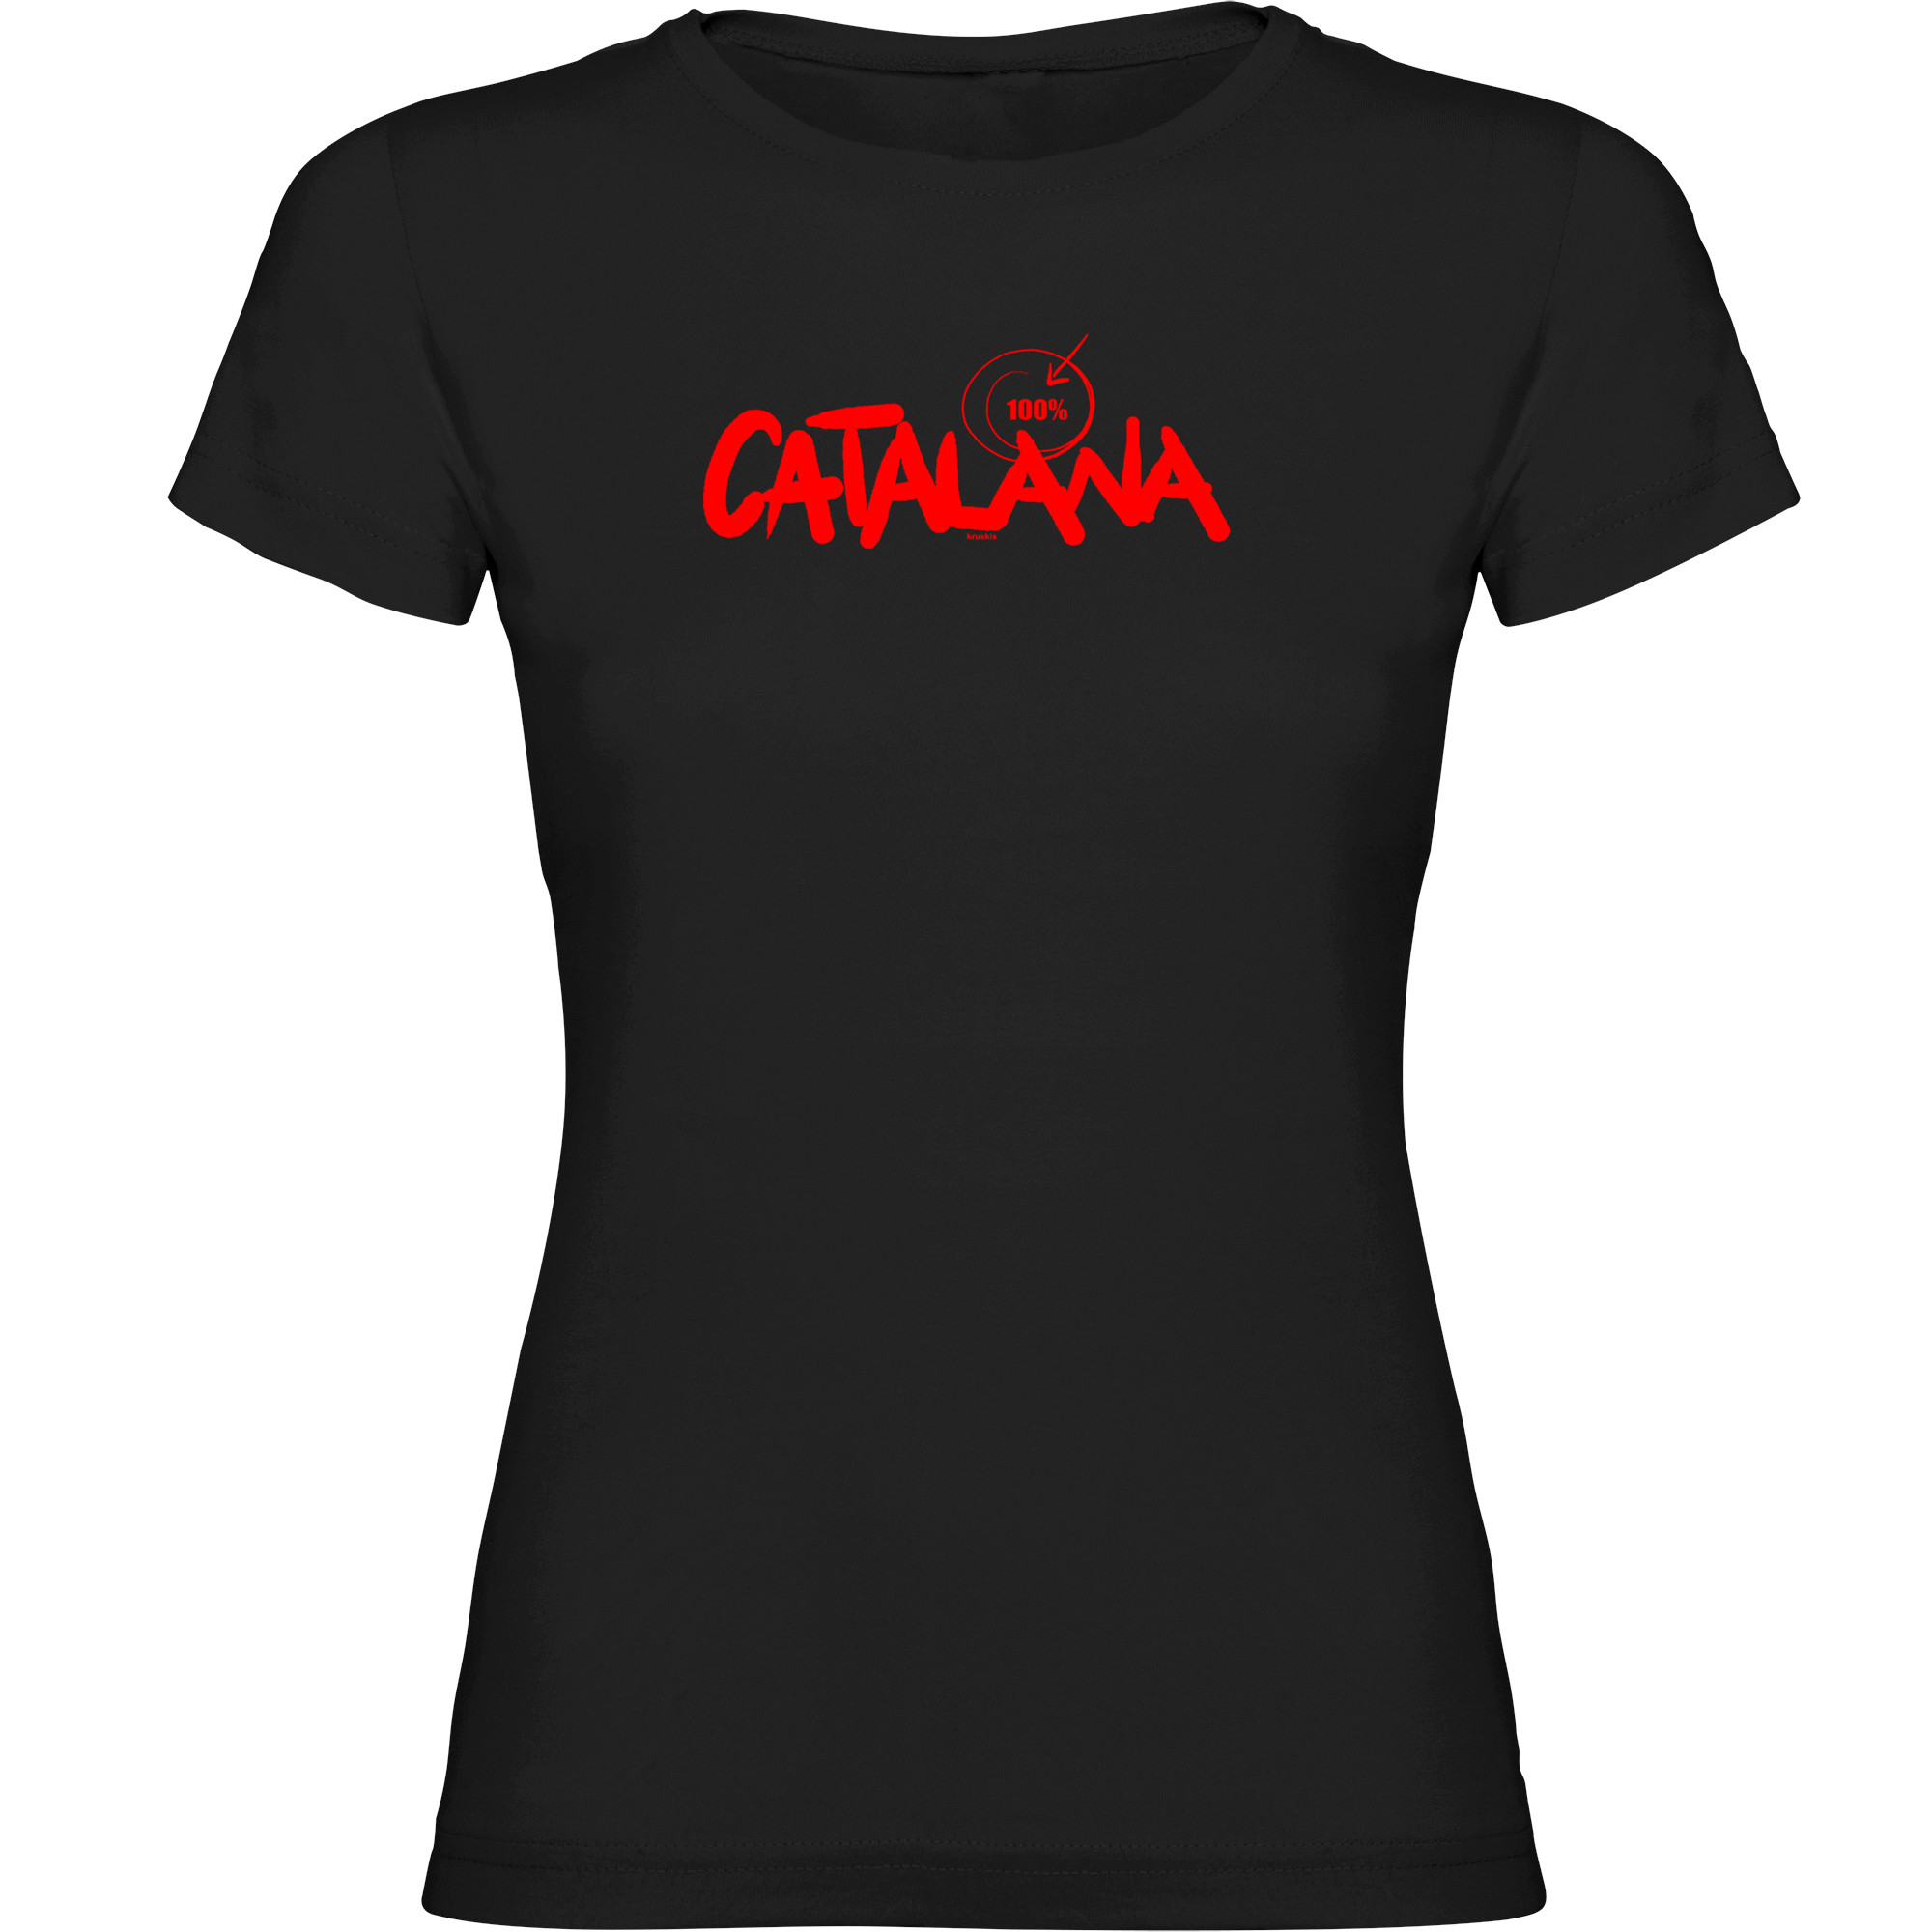 Camiseta Catalunya 100 % Catalana Manga Corta Mujer